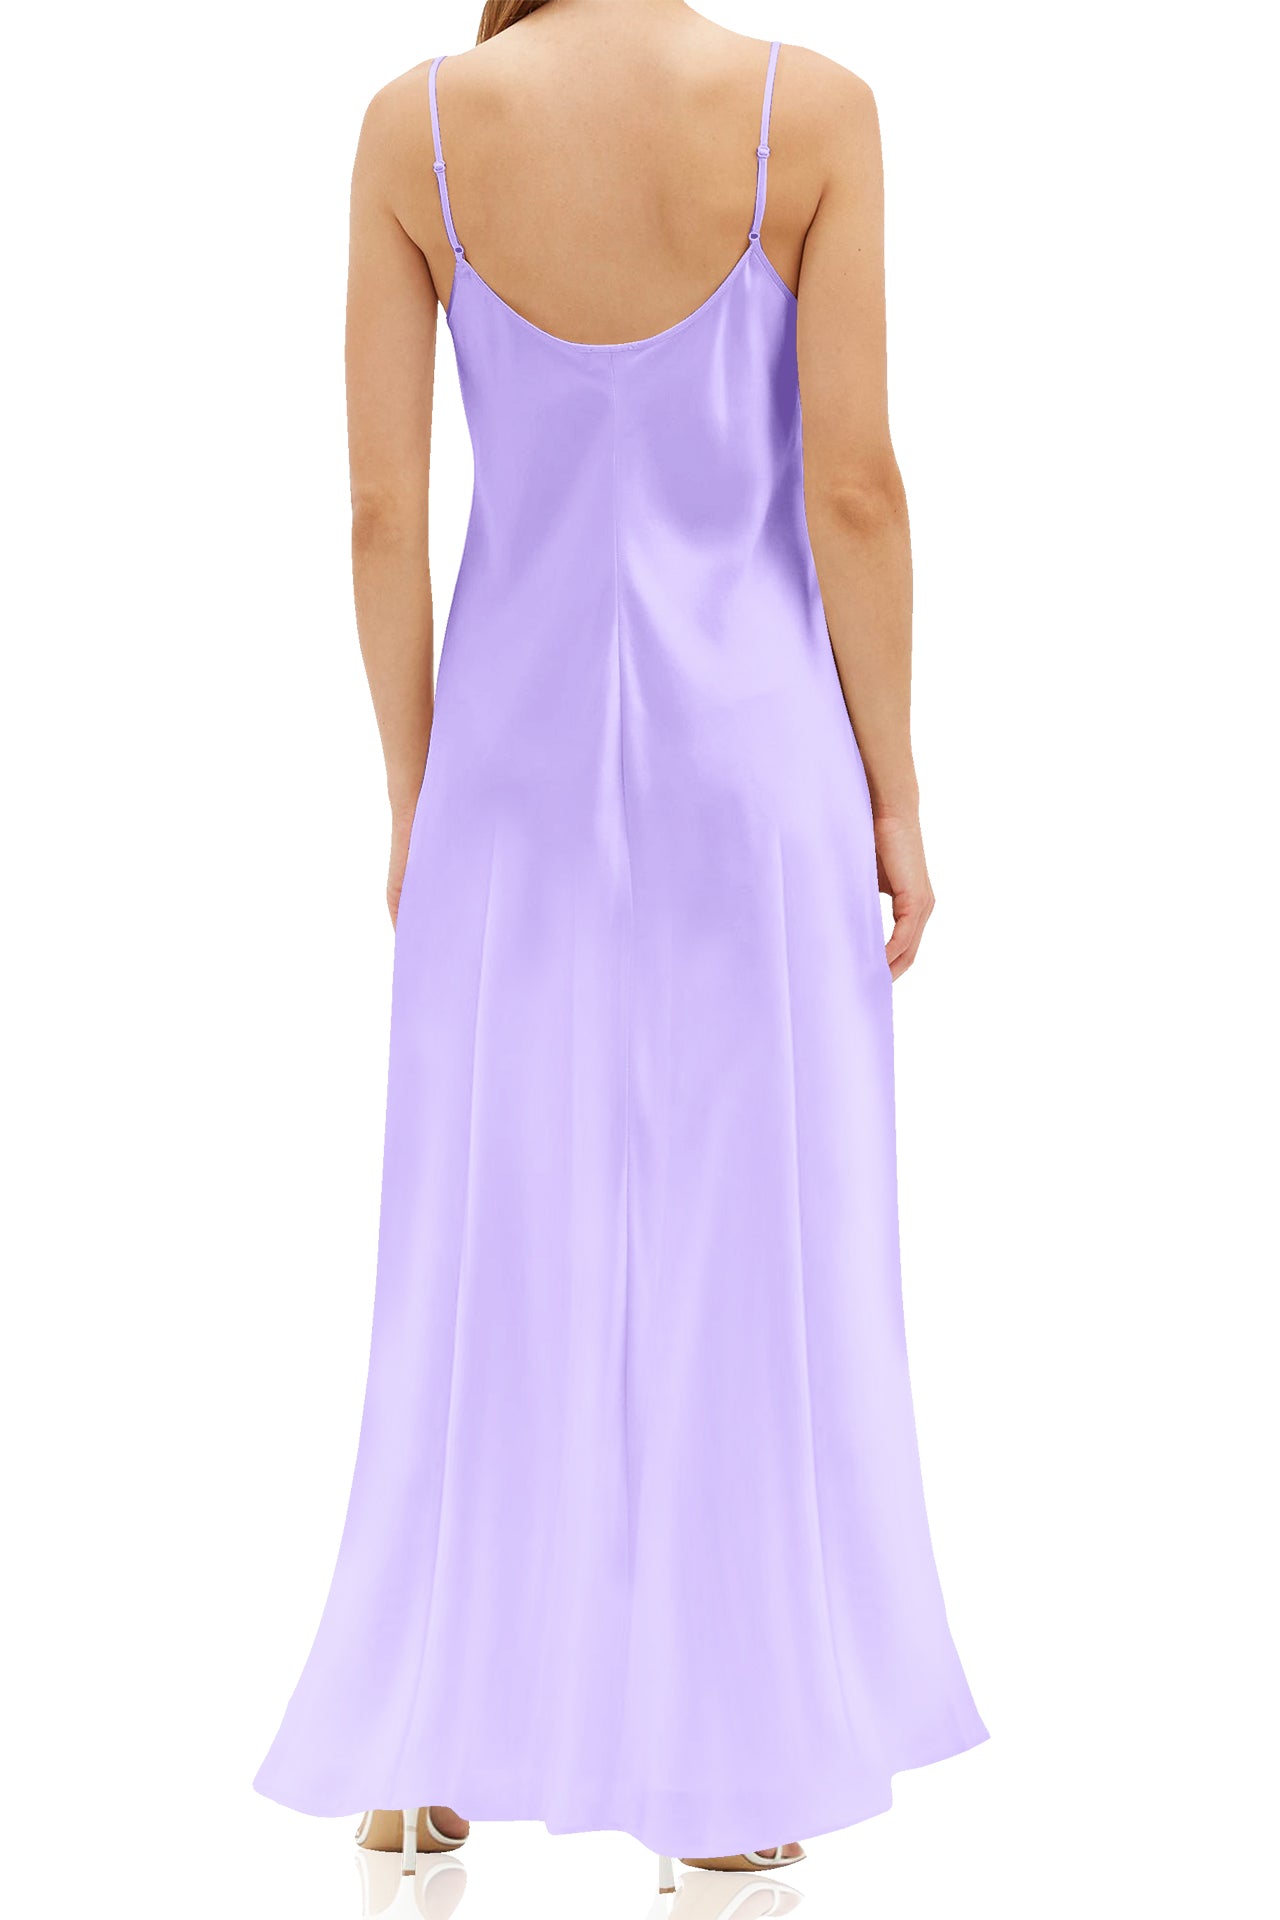 "cami dress long" "purple maxi slip dress," "floor length slip dress" "Kyle X Shahida"